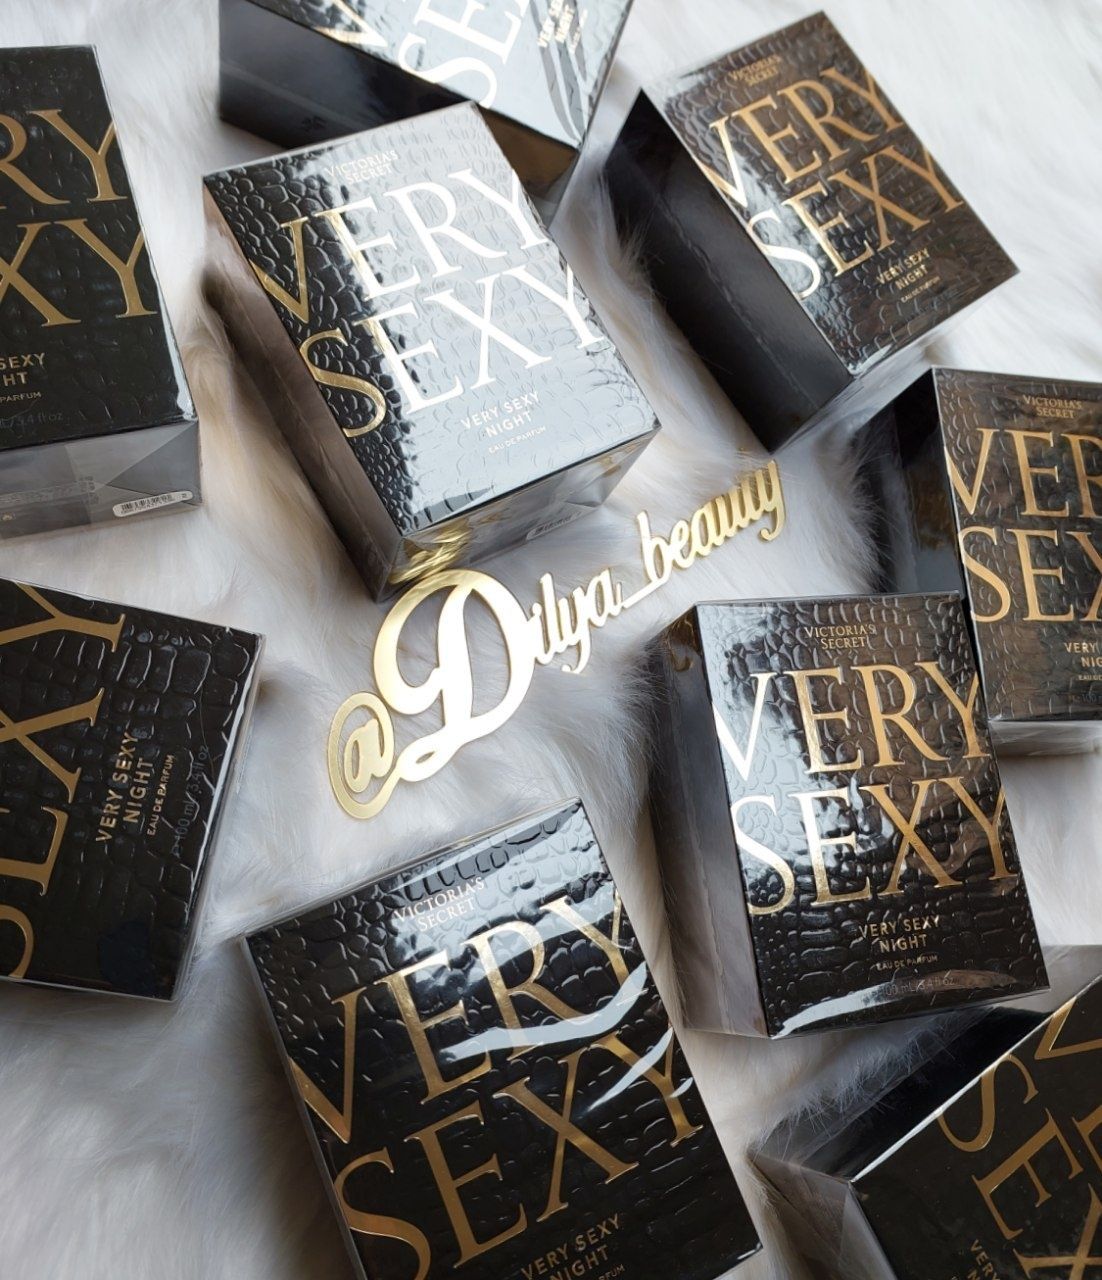 Victoria's secret VERY SEXY NEIGHT eau de Parfum.